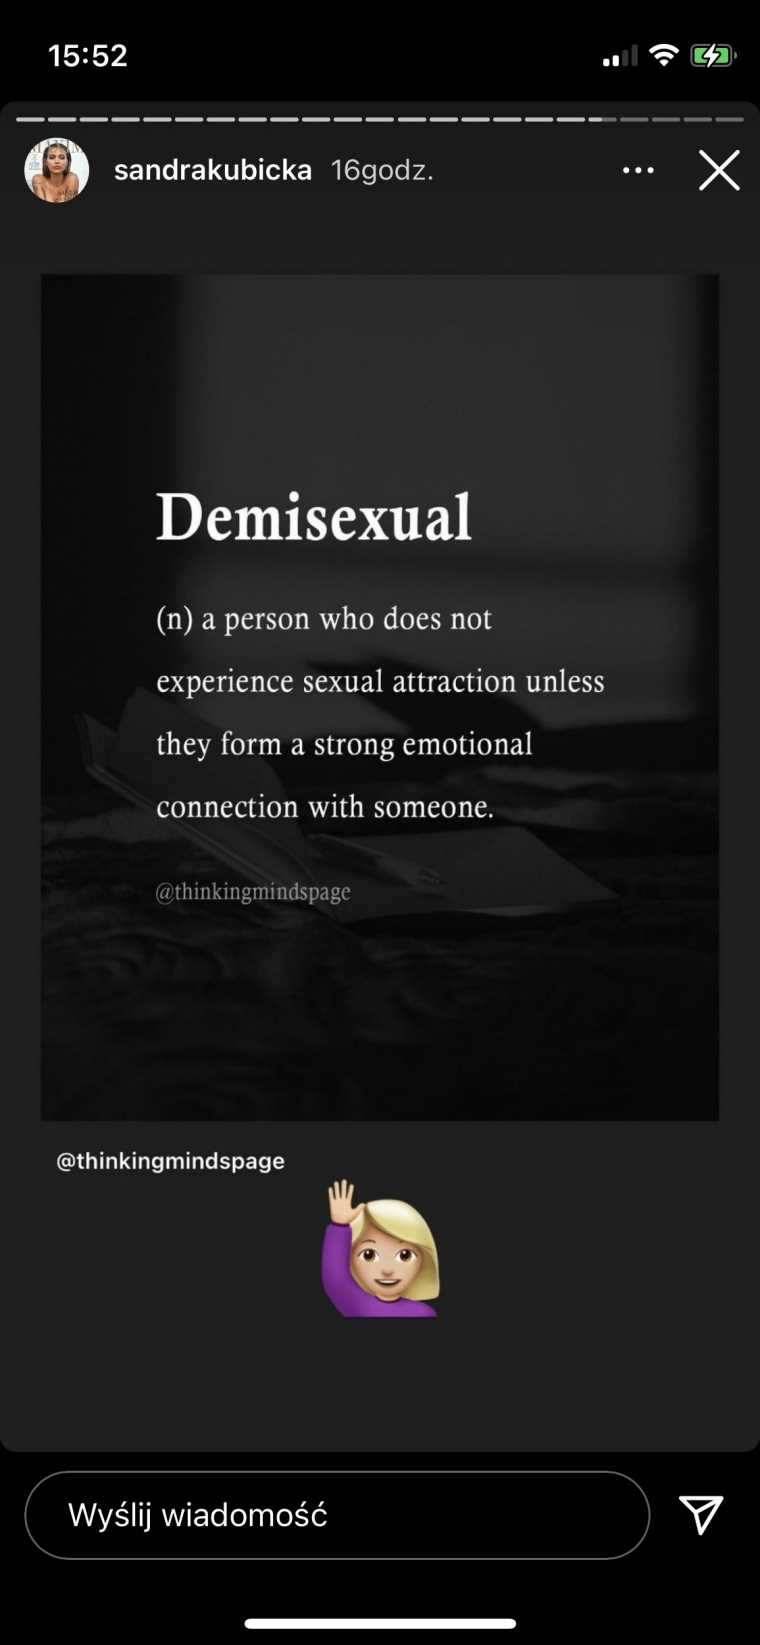 Charakterystyka demisexualnych osób